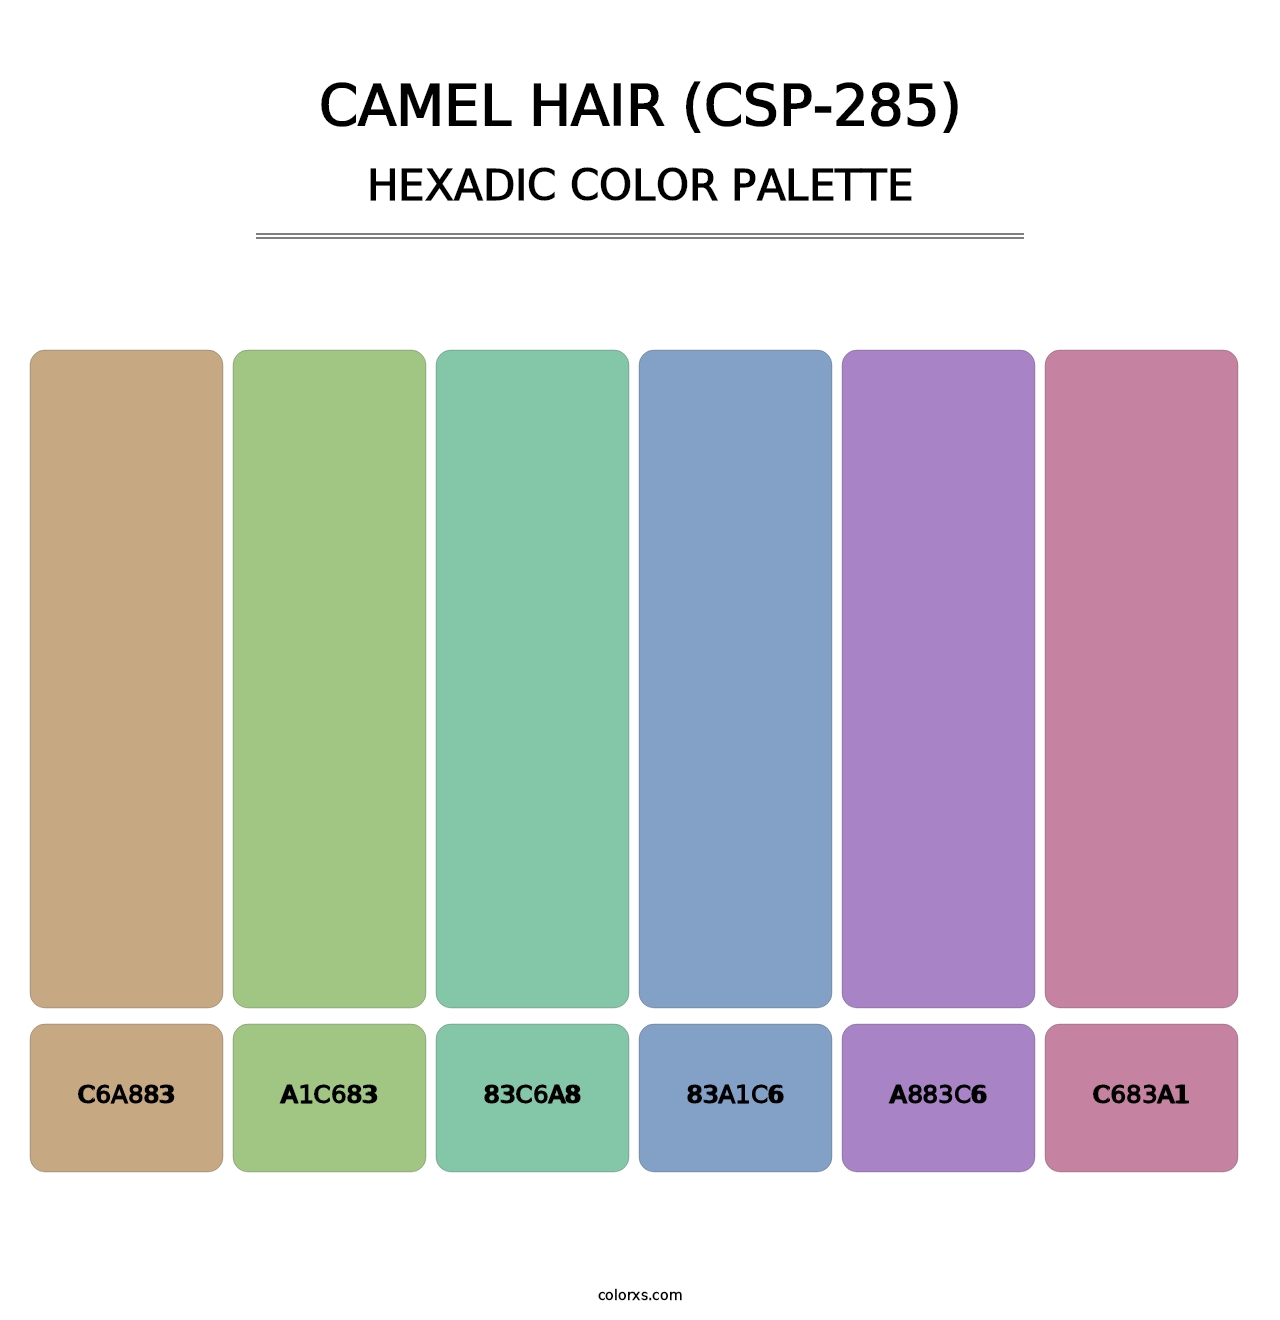 Camel Hair (CSP-285) - Hexadic Color Palette